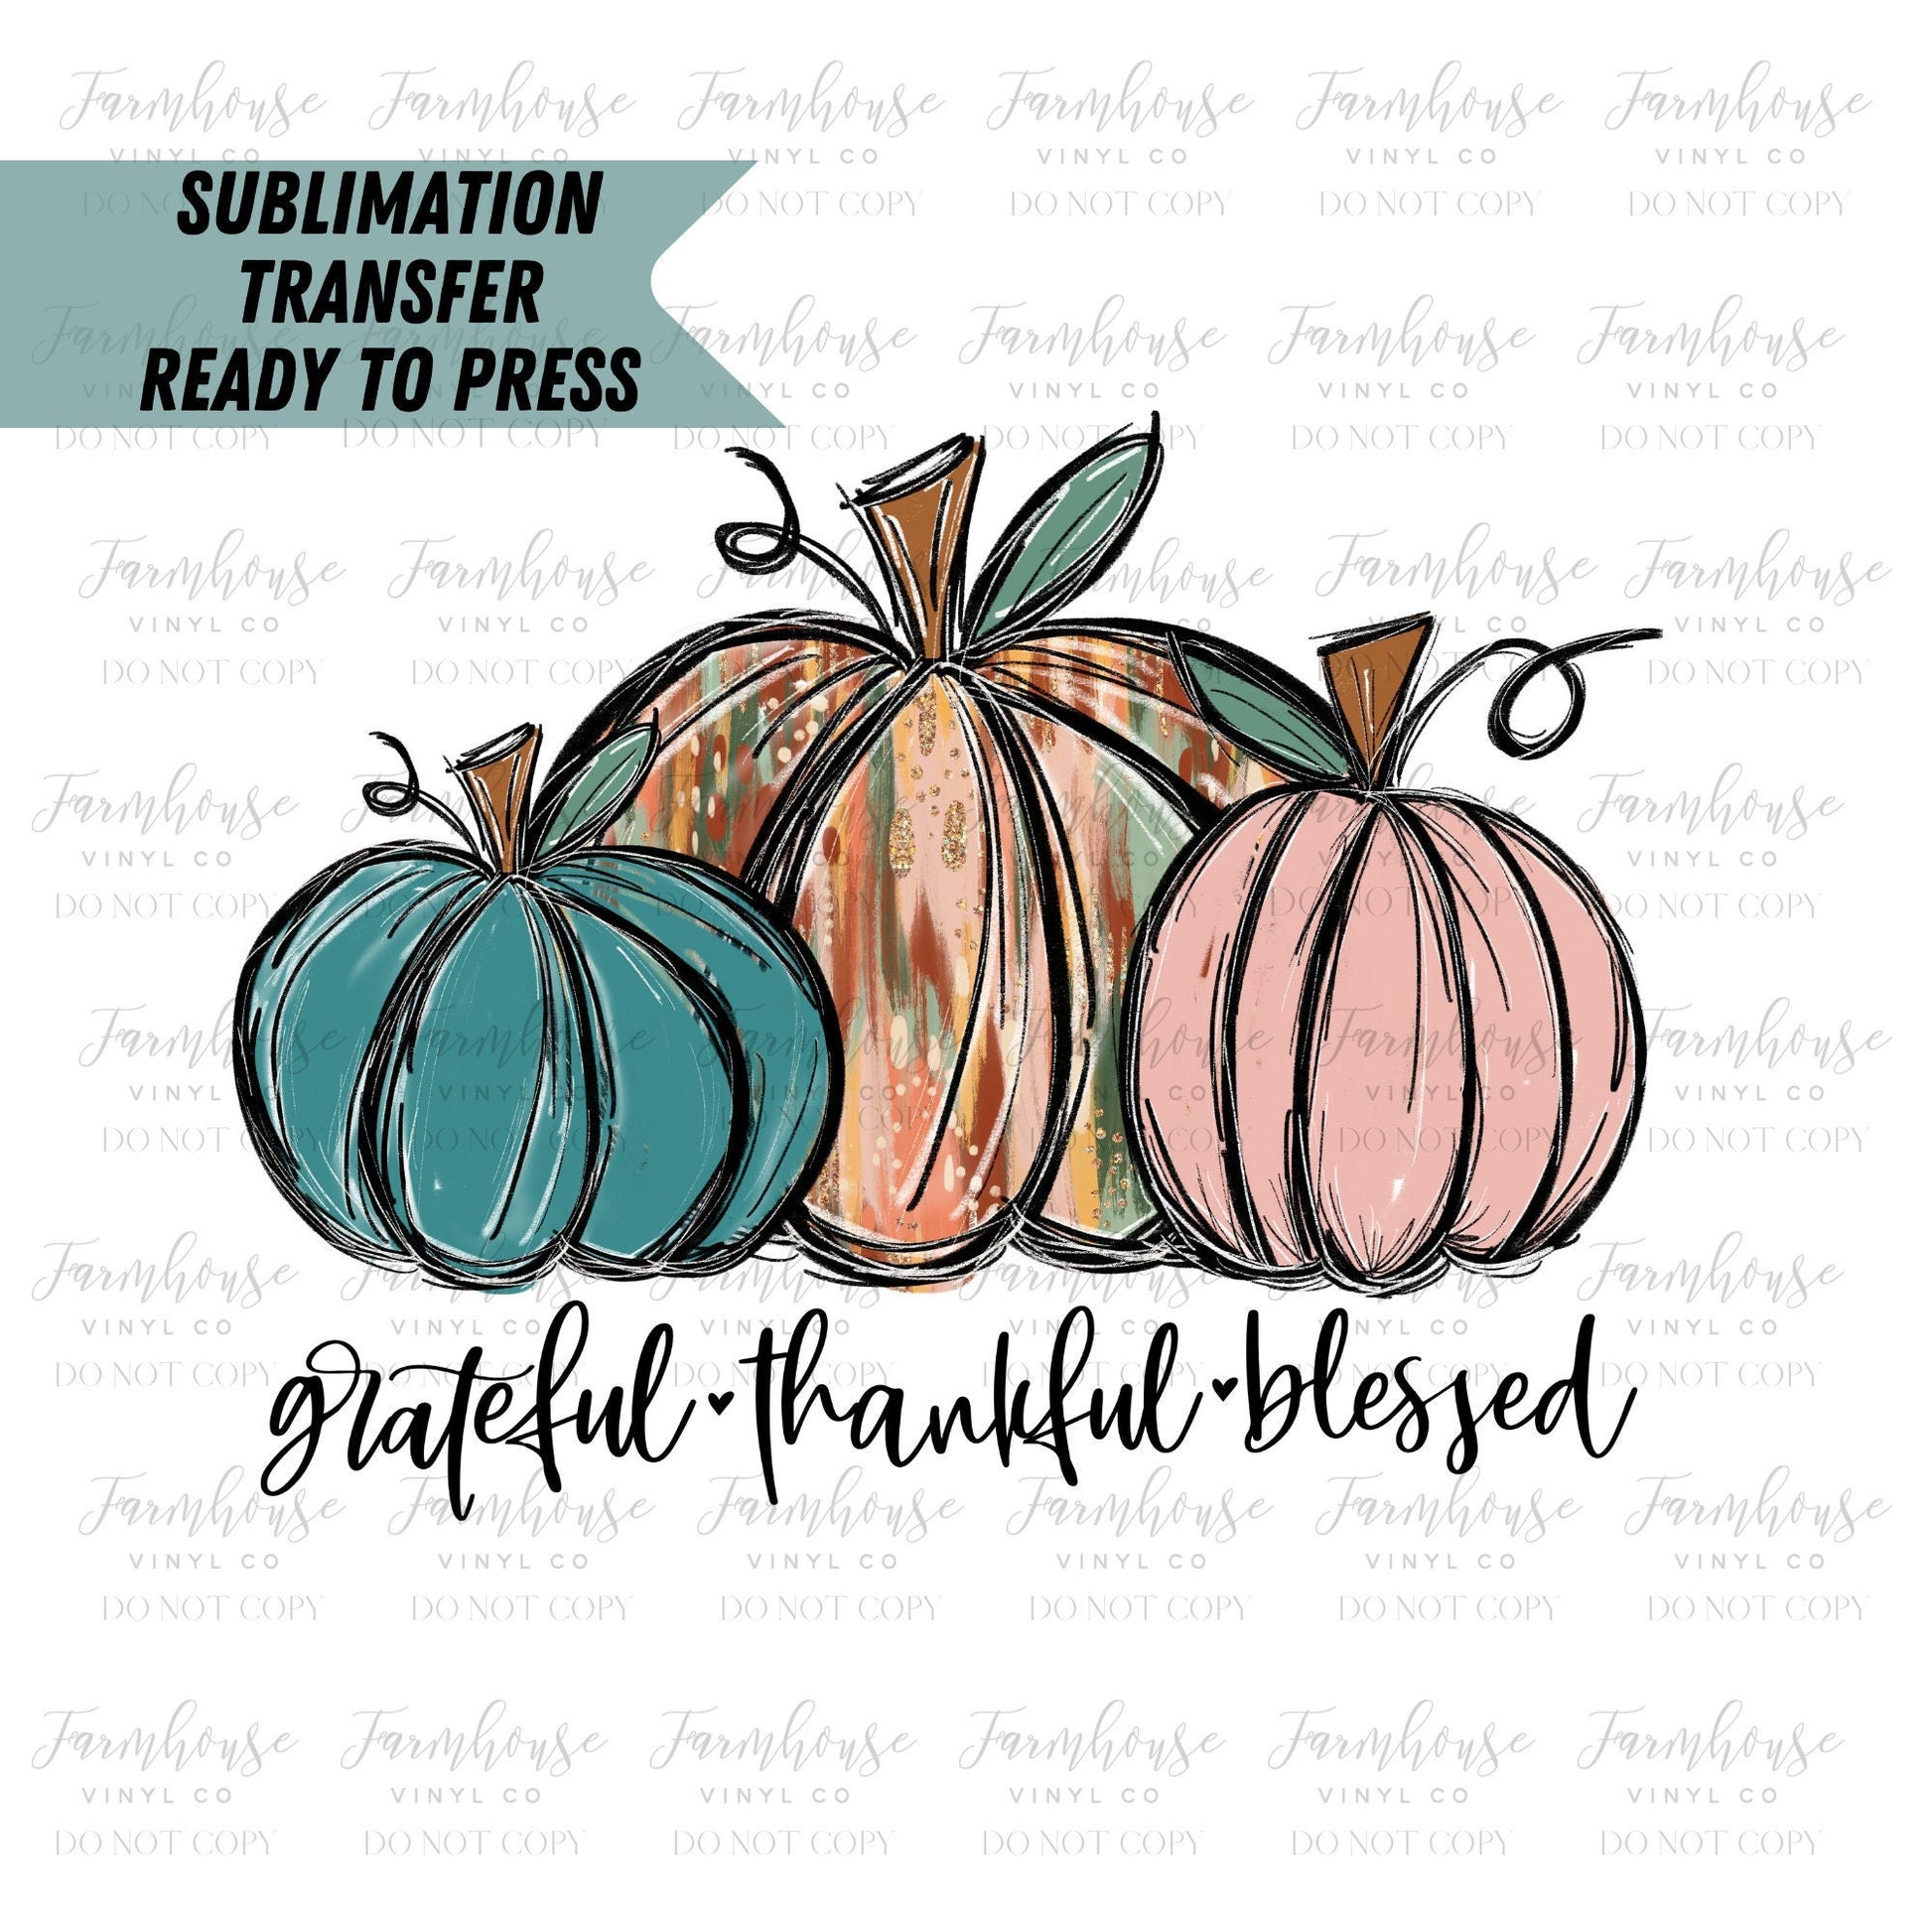 Fall Pumpkins Grateful Thankful Blessed Sublimation Design, Pumpkin Designs, Ready To Press, Sublimation, Transfer Ready Press, Teal Pumpkin - Farmhouse Vinyl Co